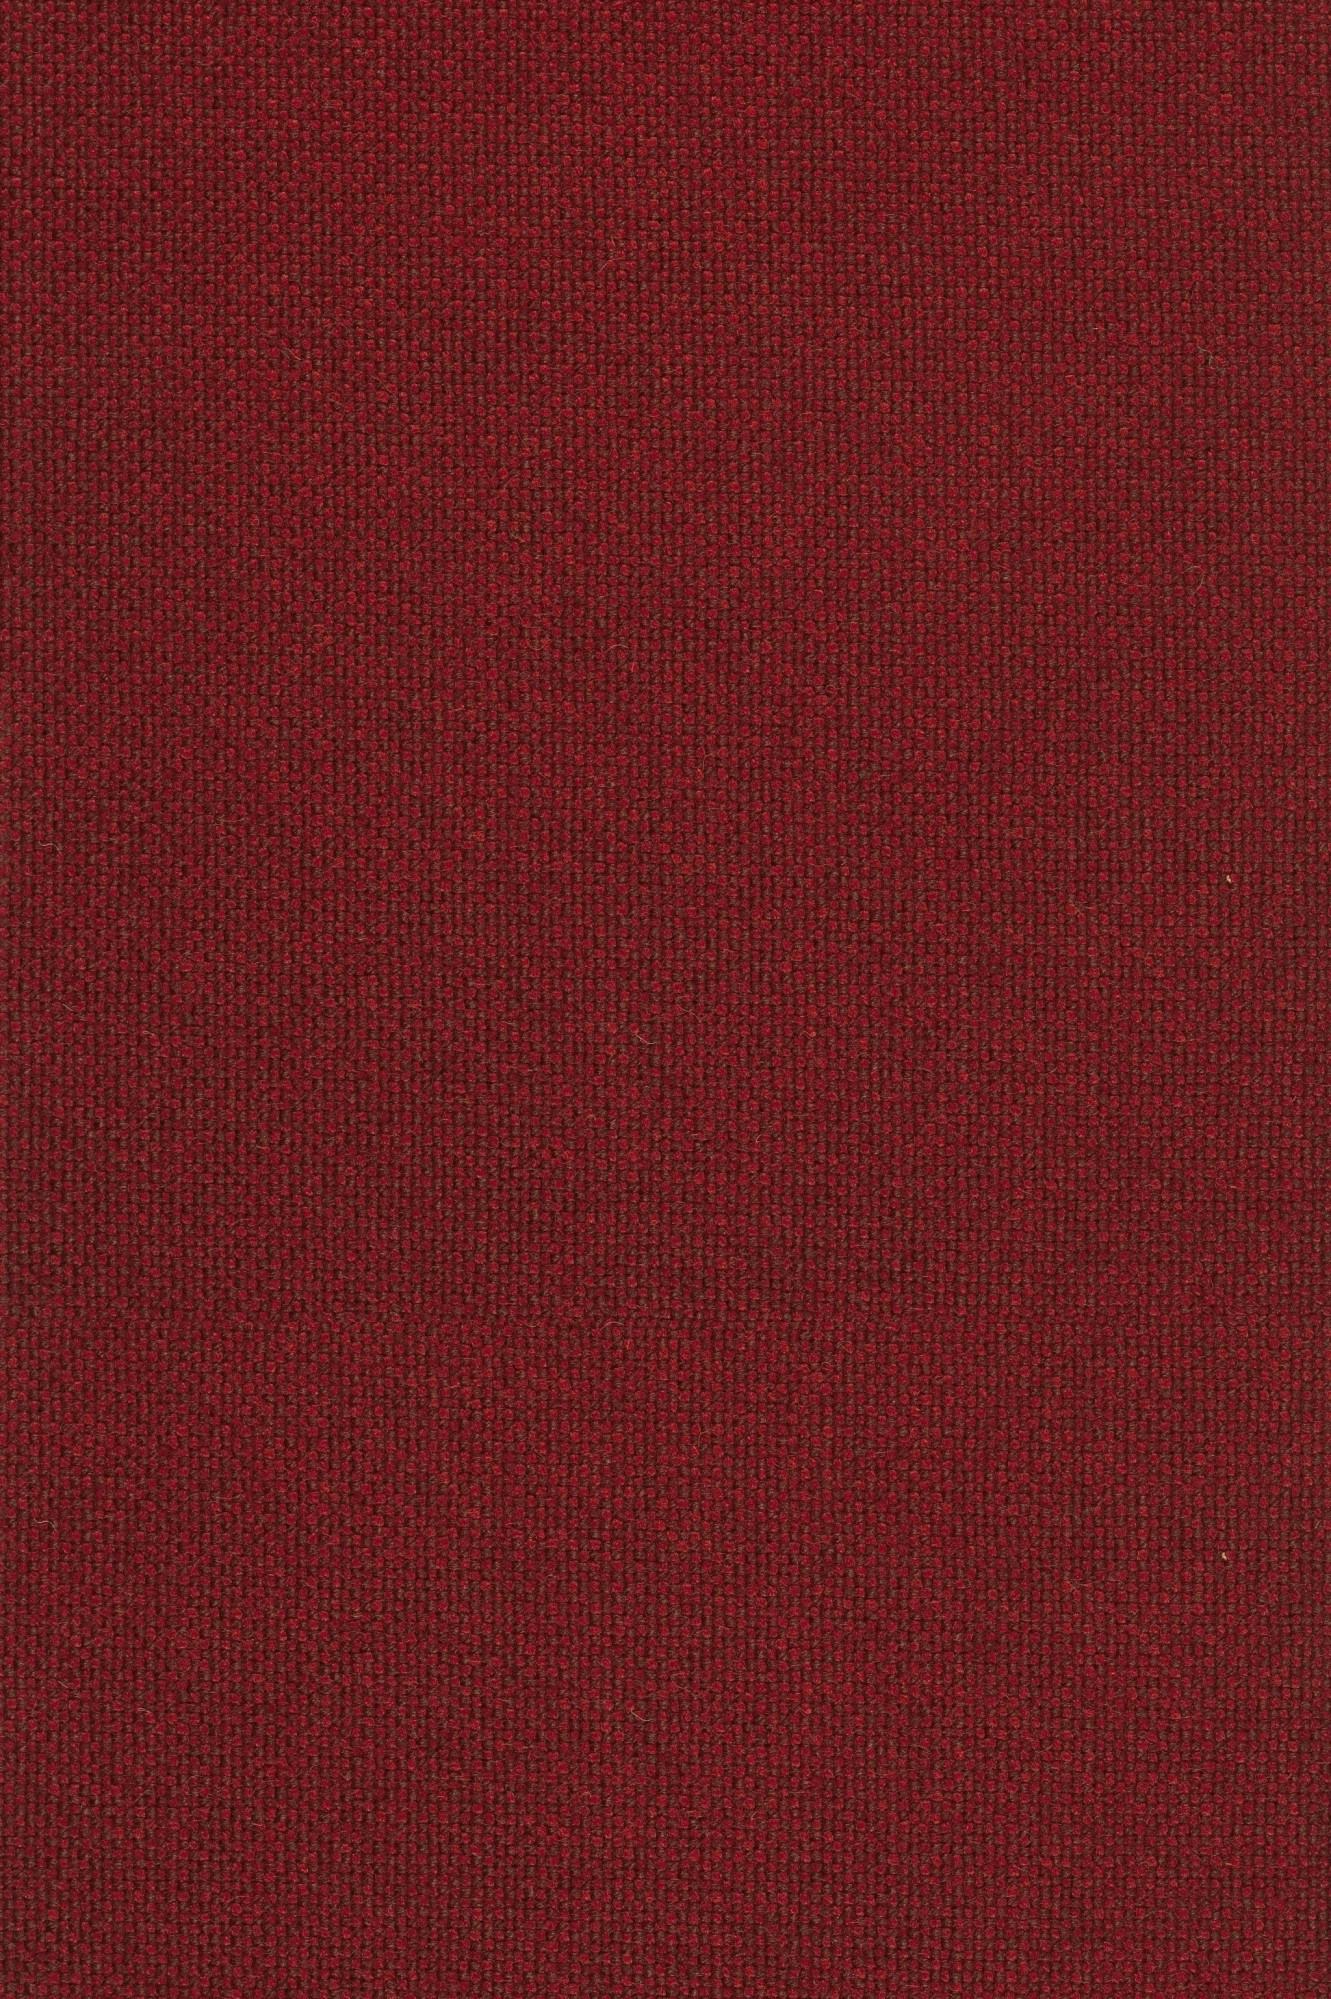 Fabric sample Hallingdal 65 687 red